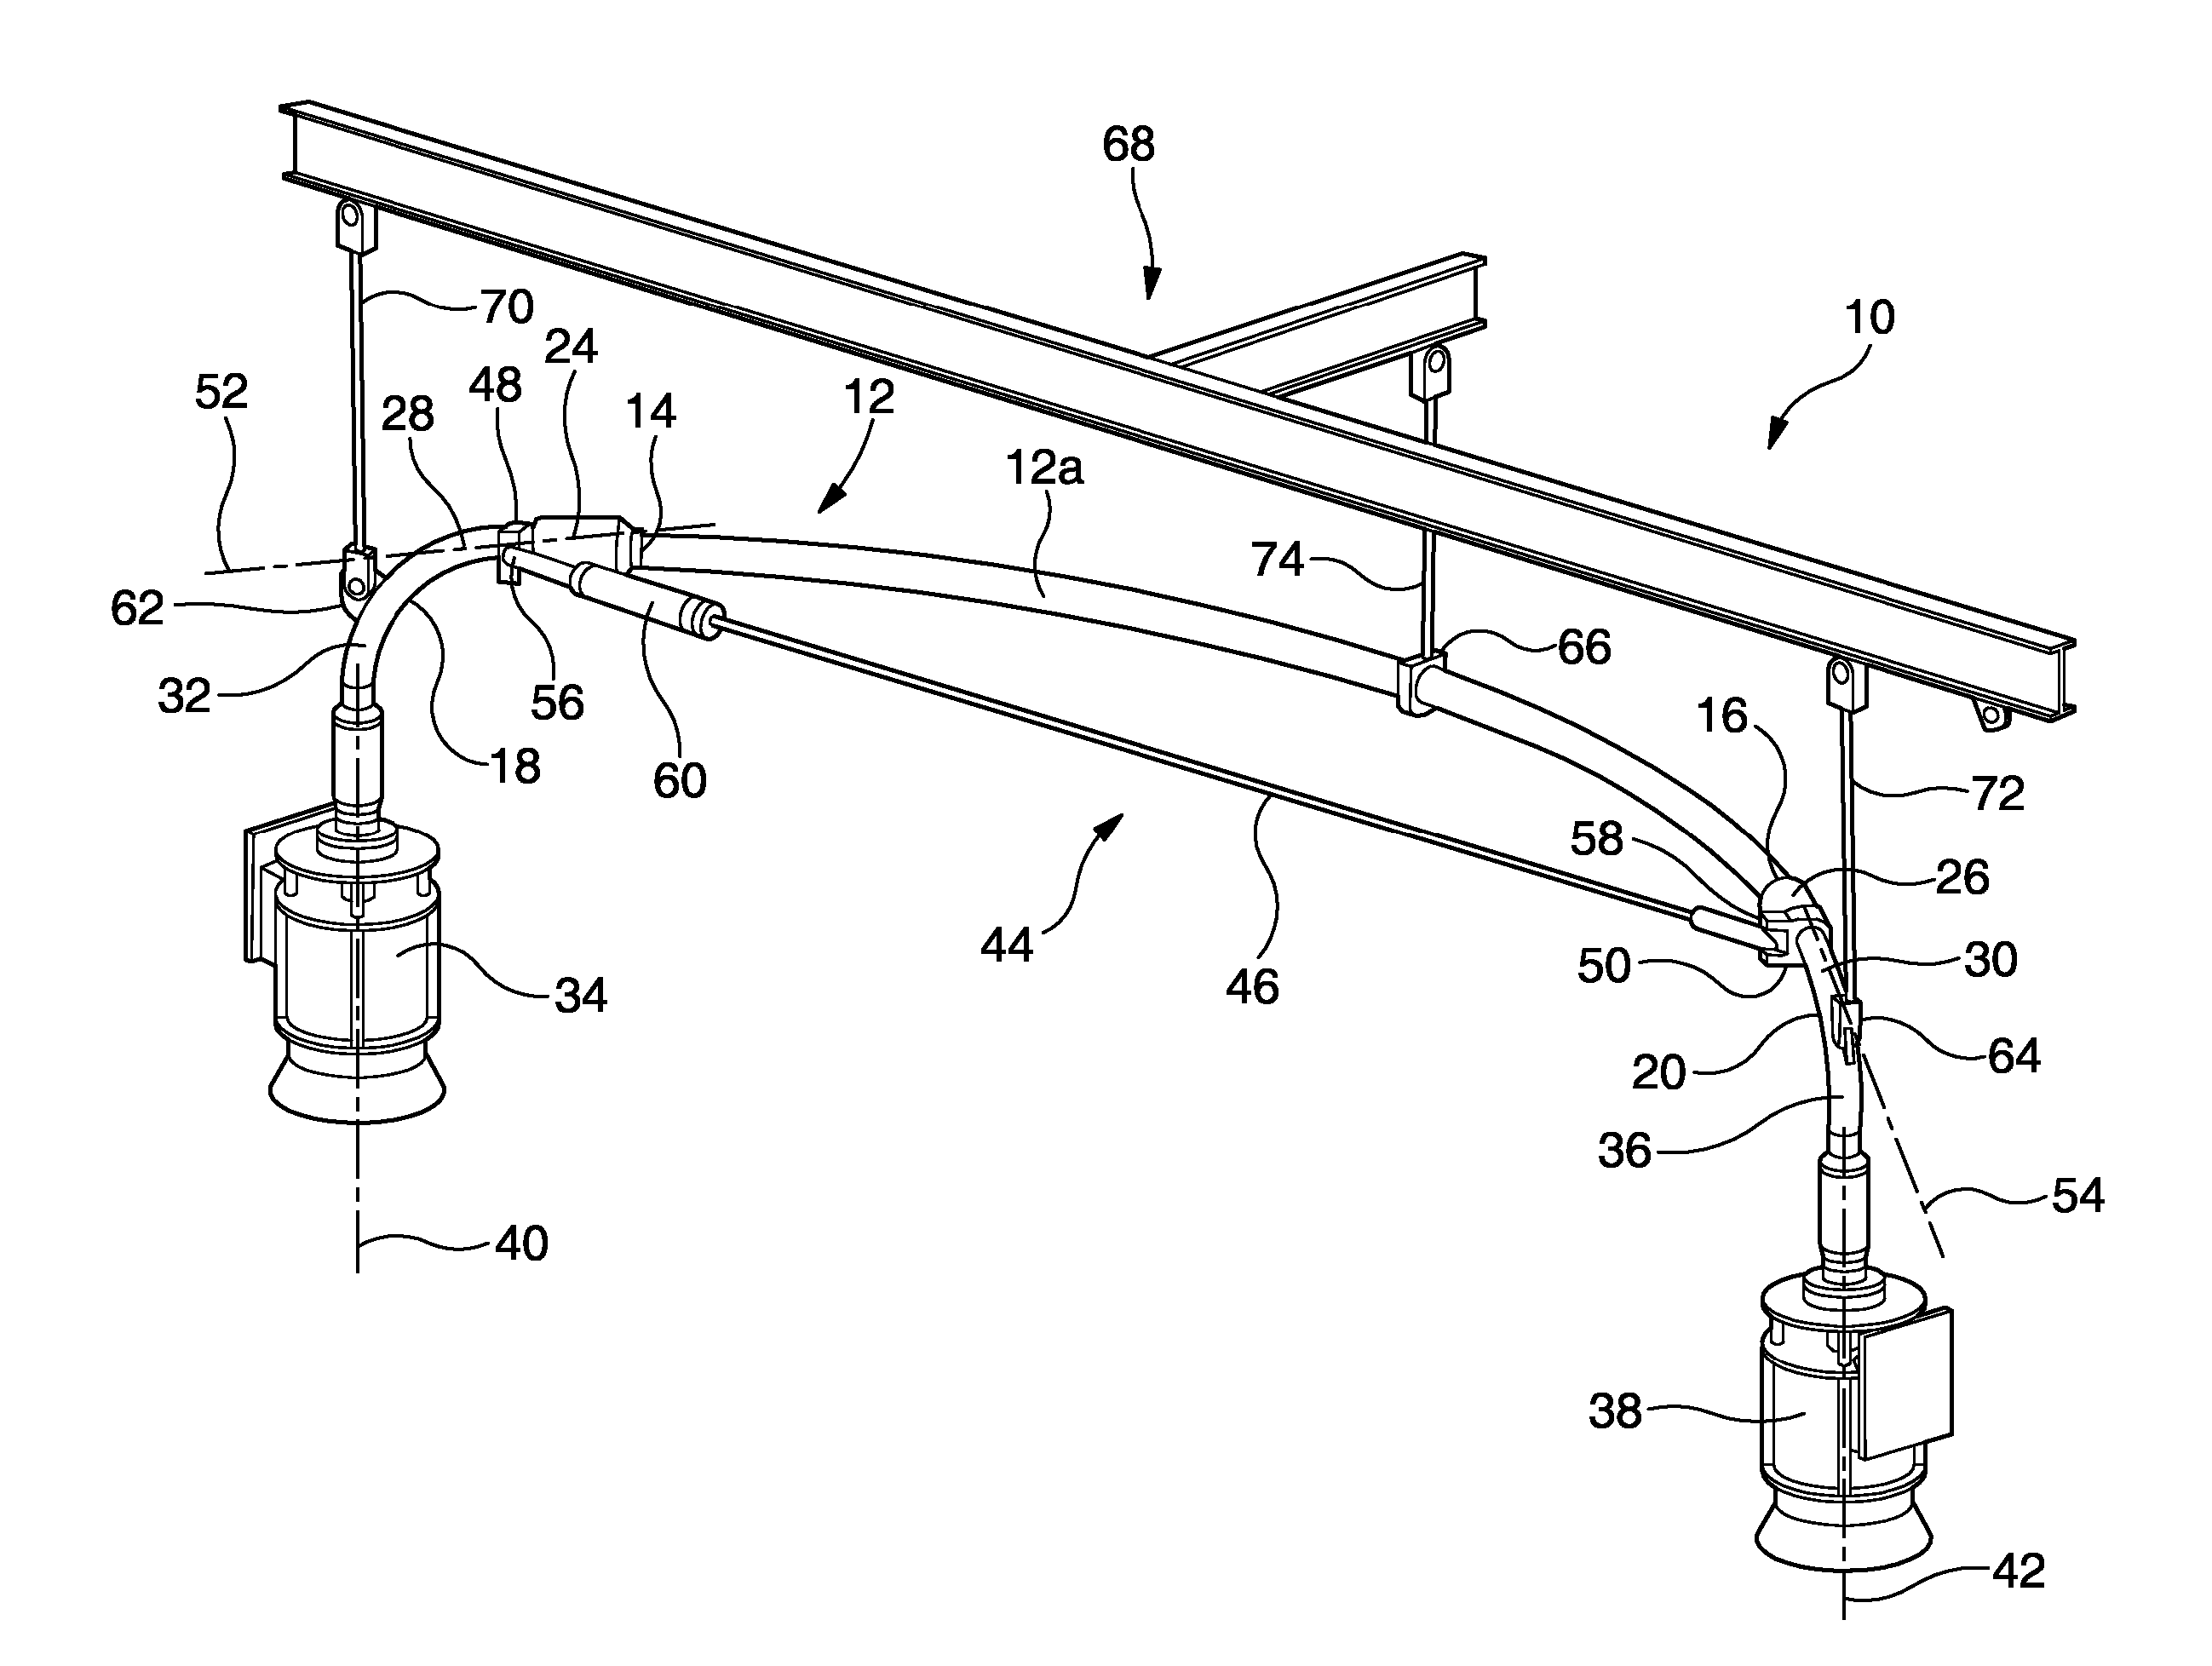 Connection apparatus